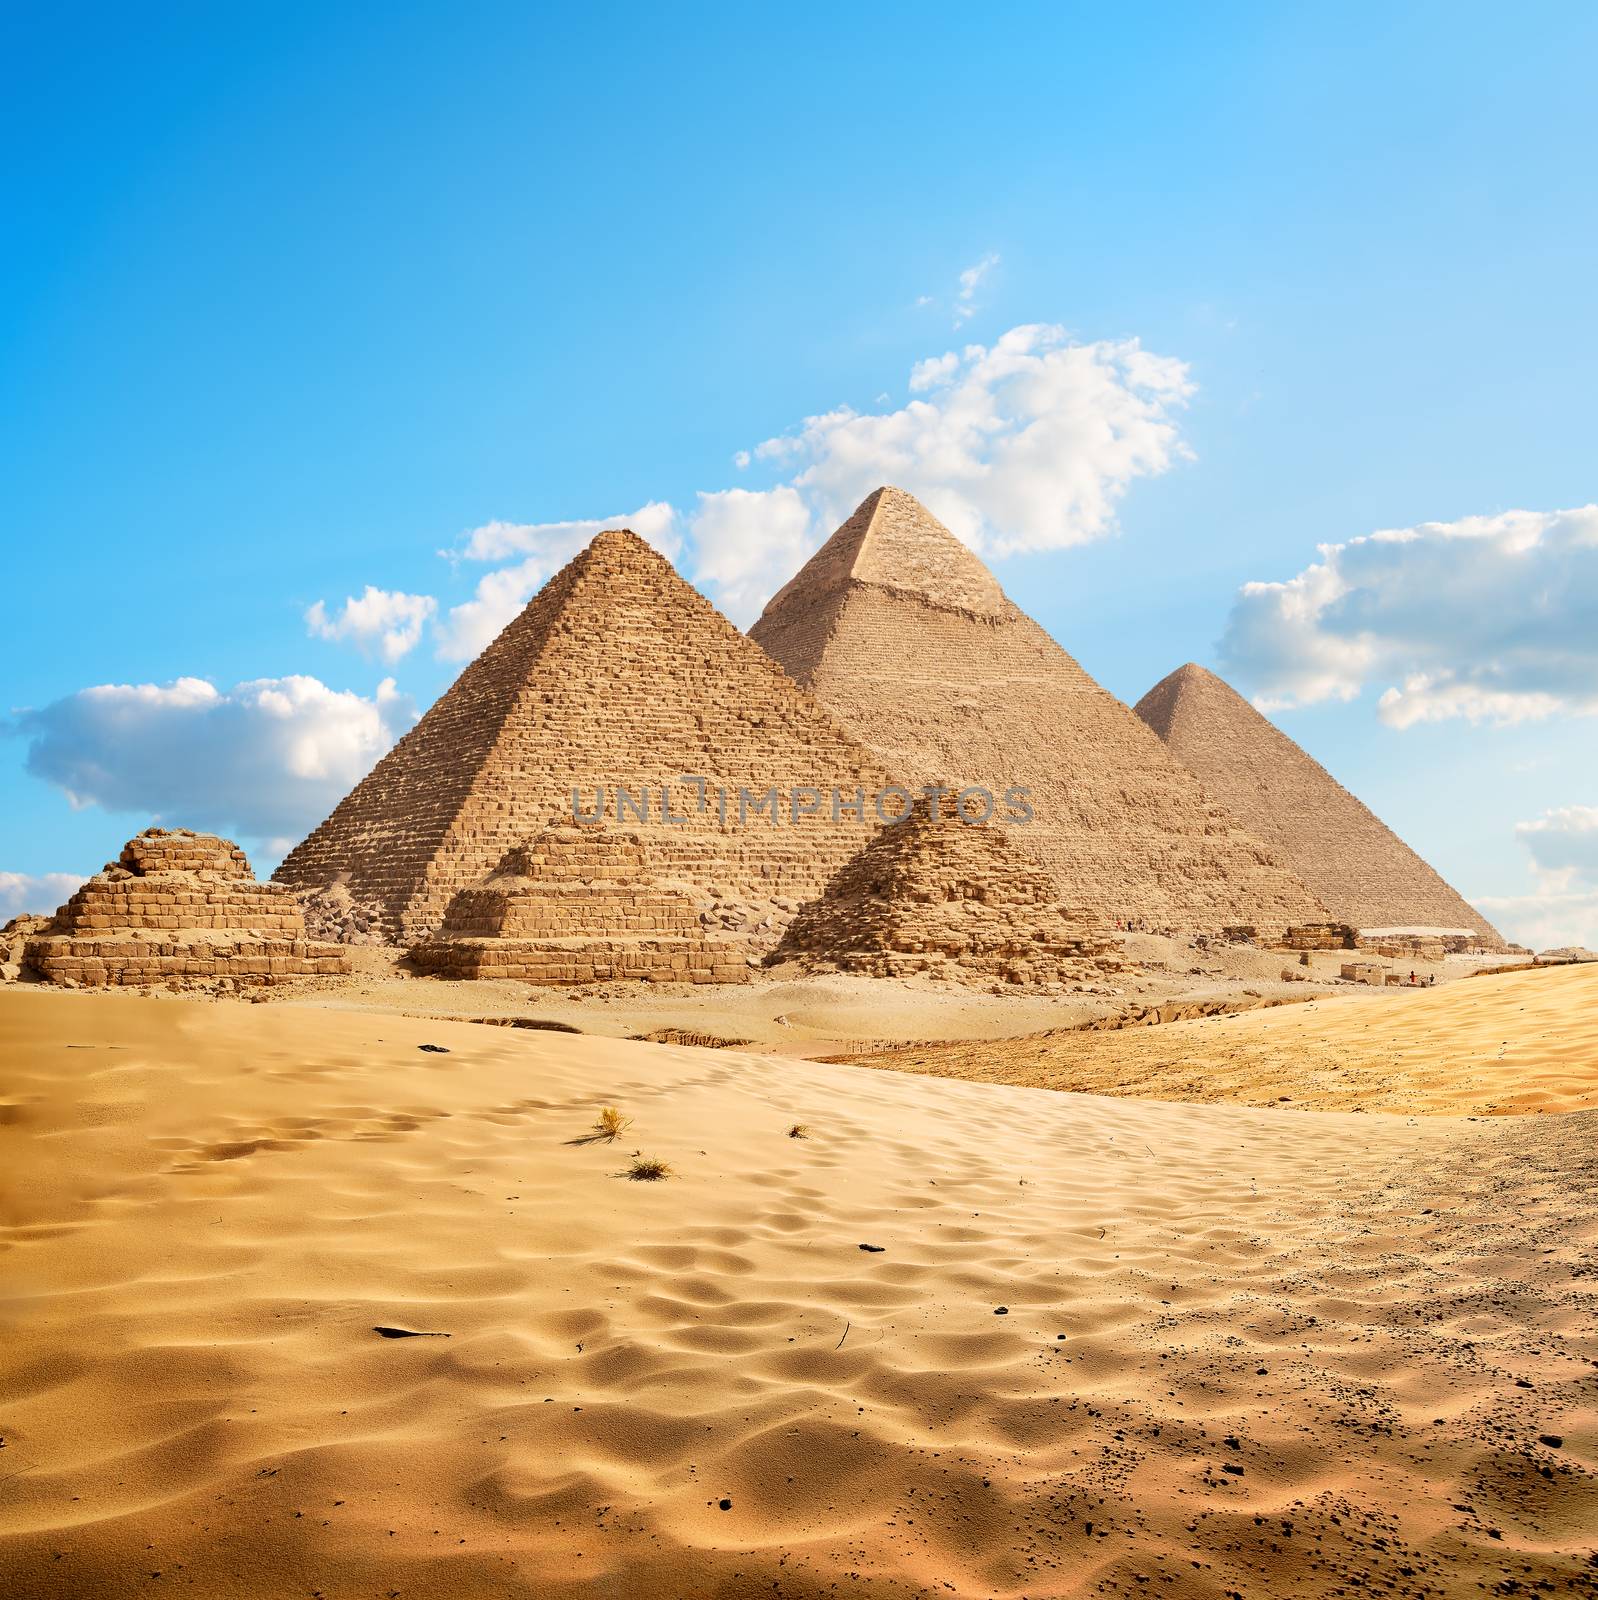 Egyptian pyramids in the desert of Giza. Egypt